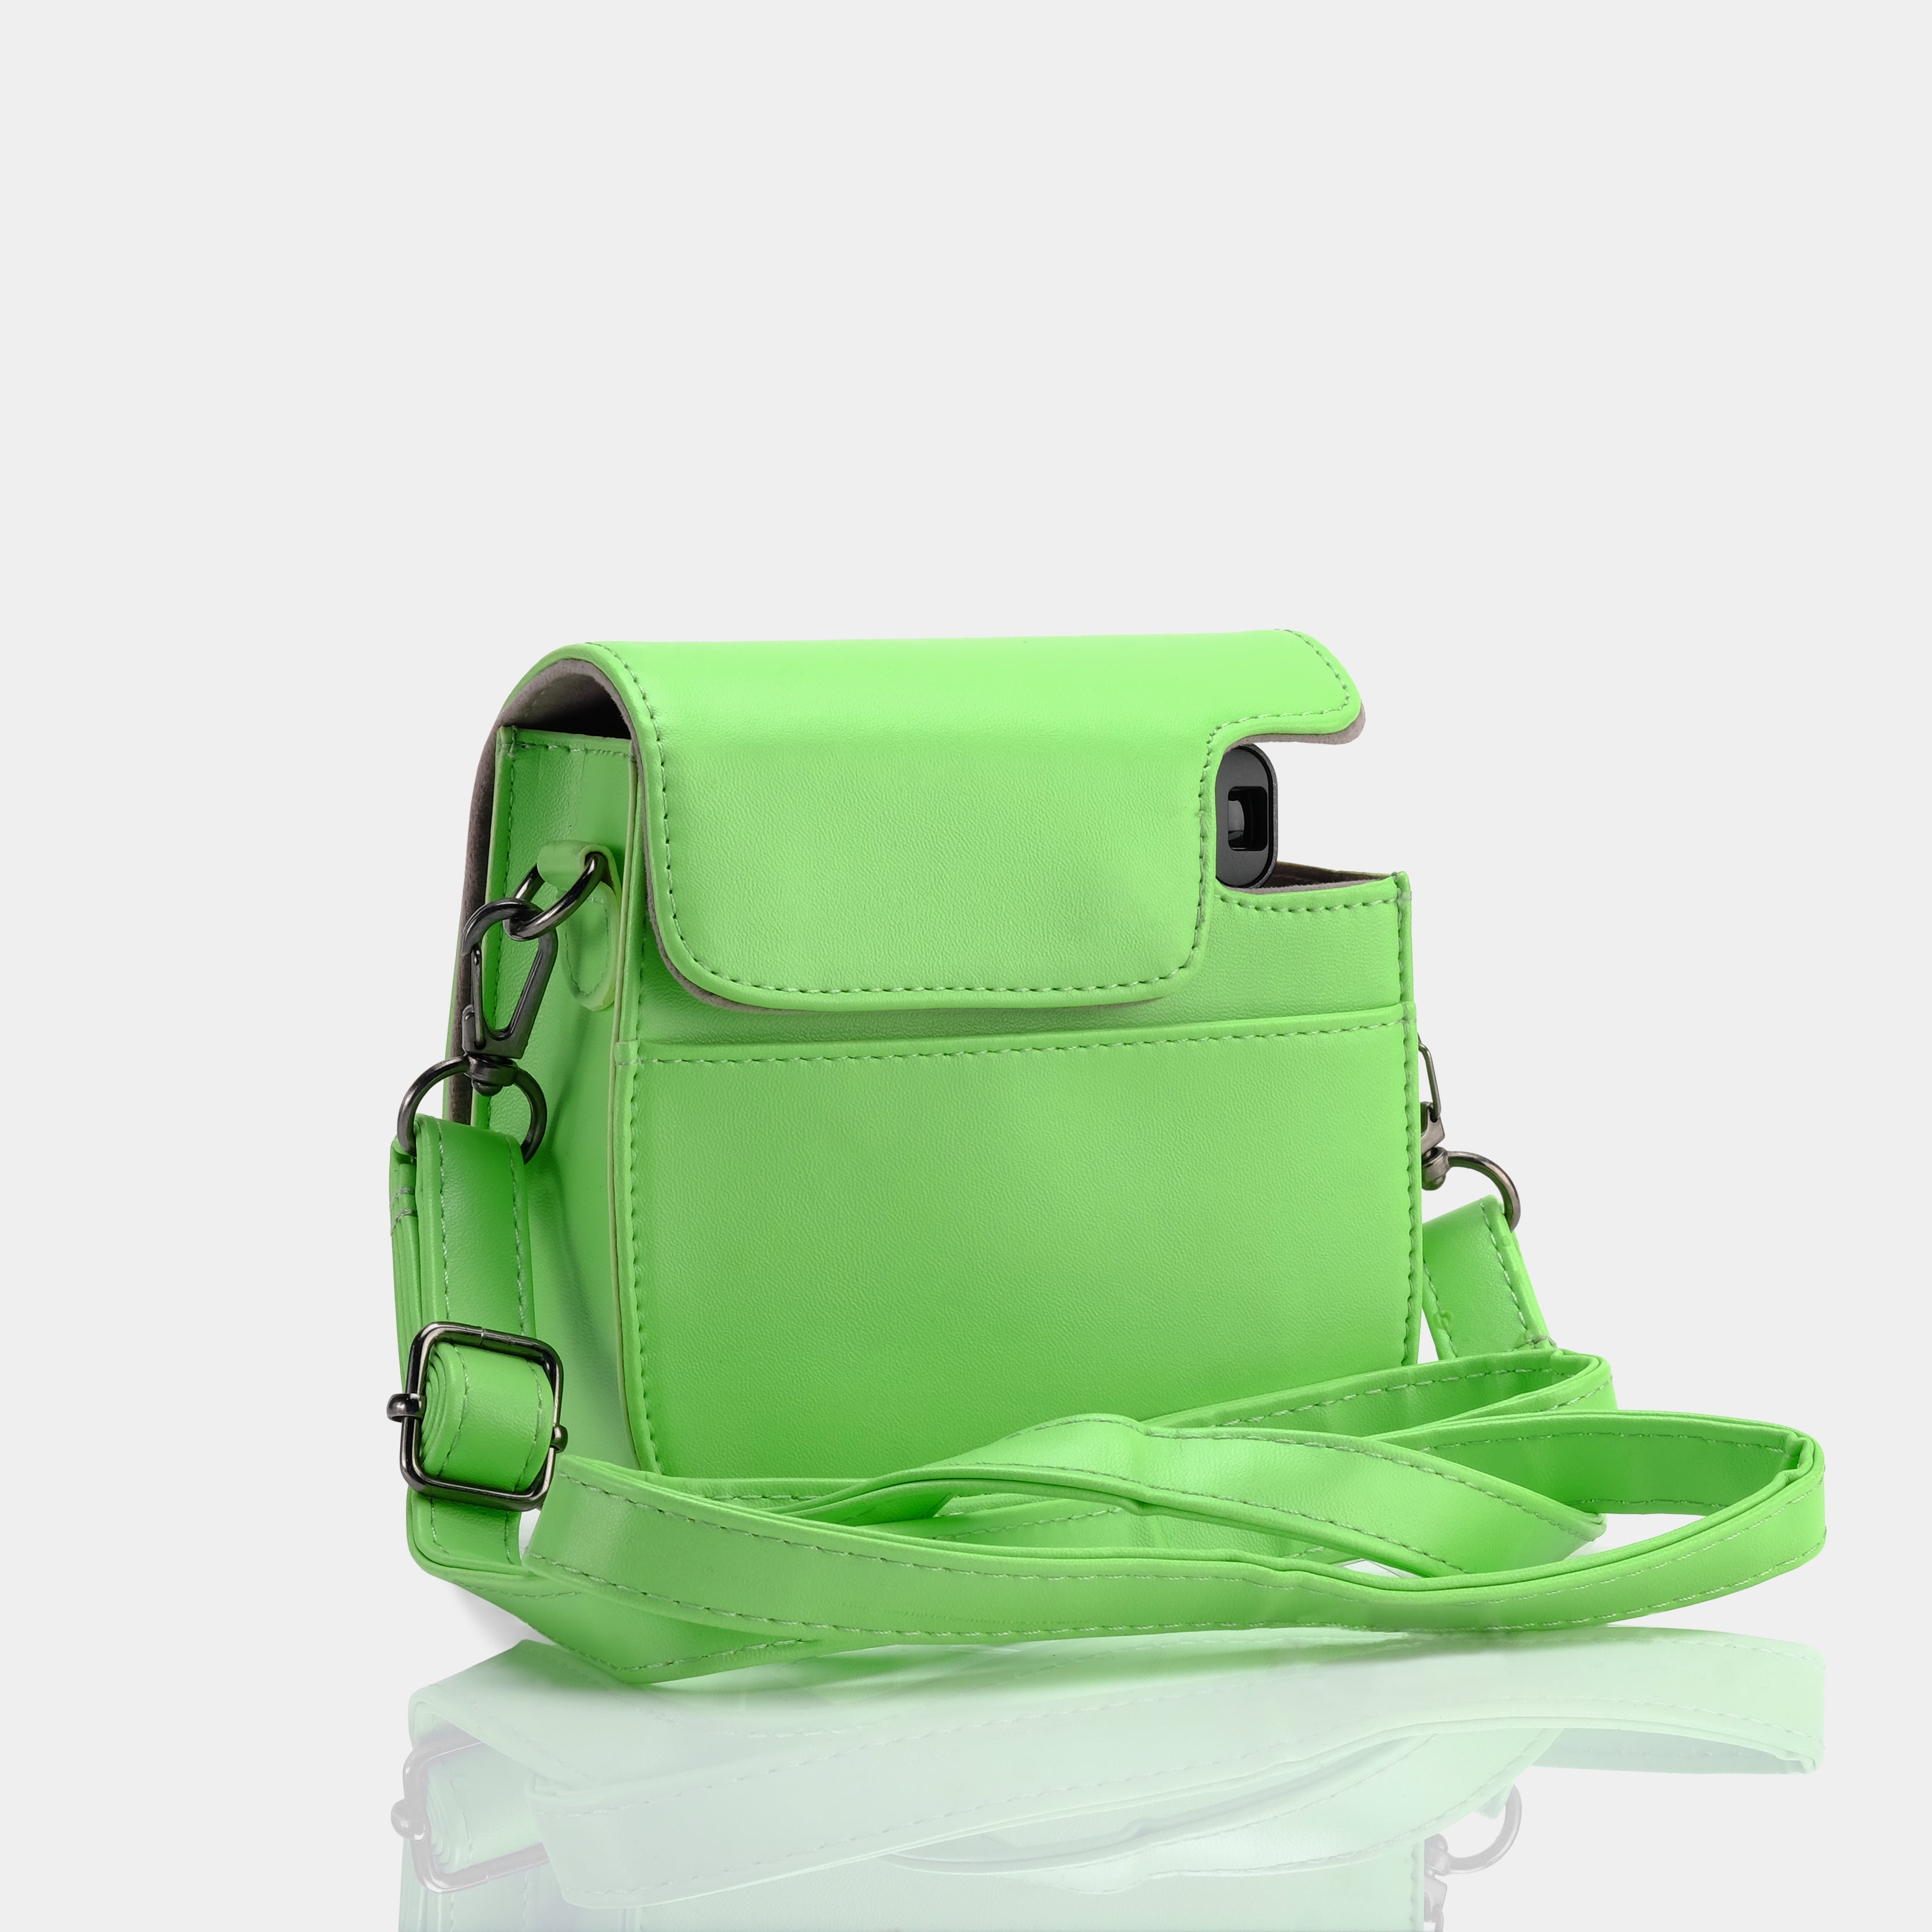 Instax Mini Lime Green Camera Bag